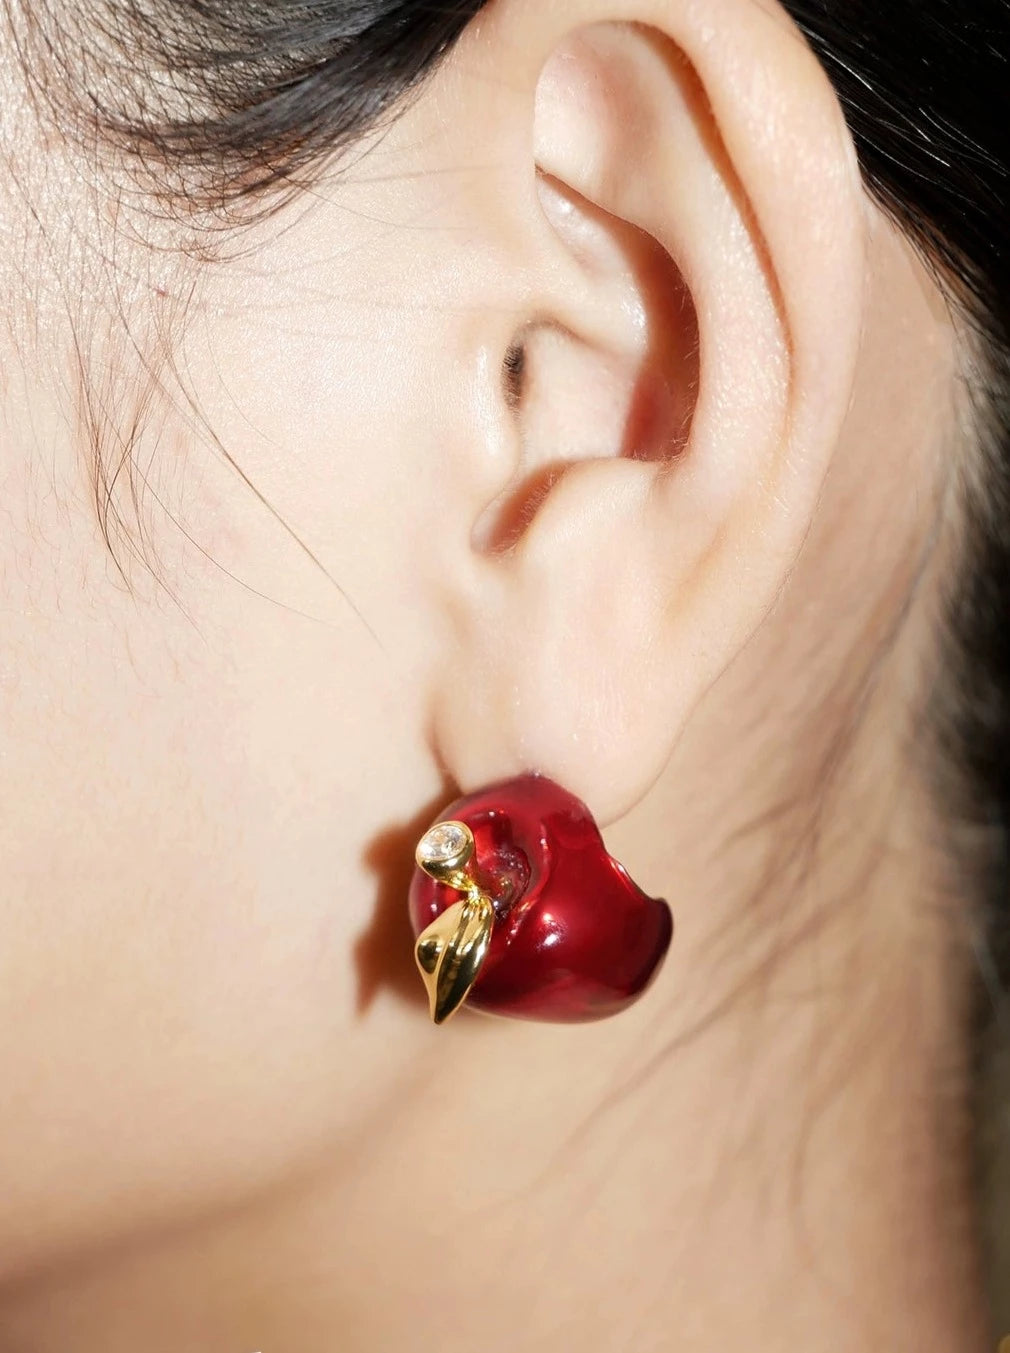 Plump red apple earrings B2438